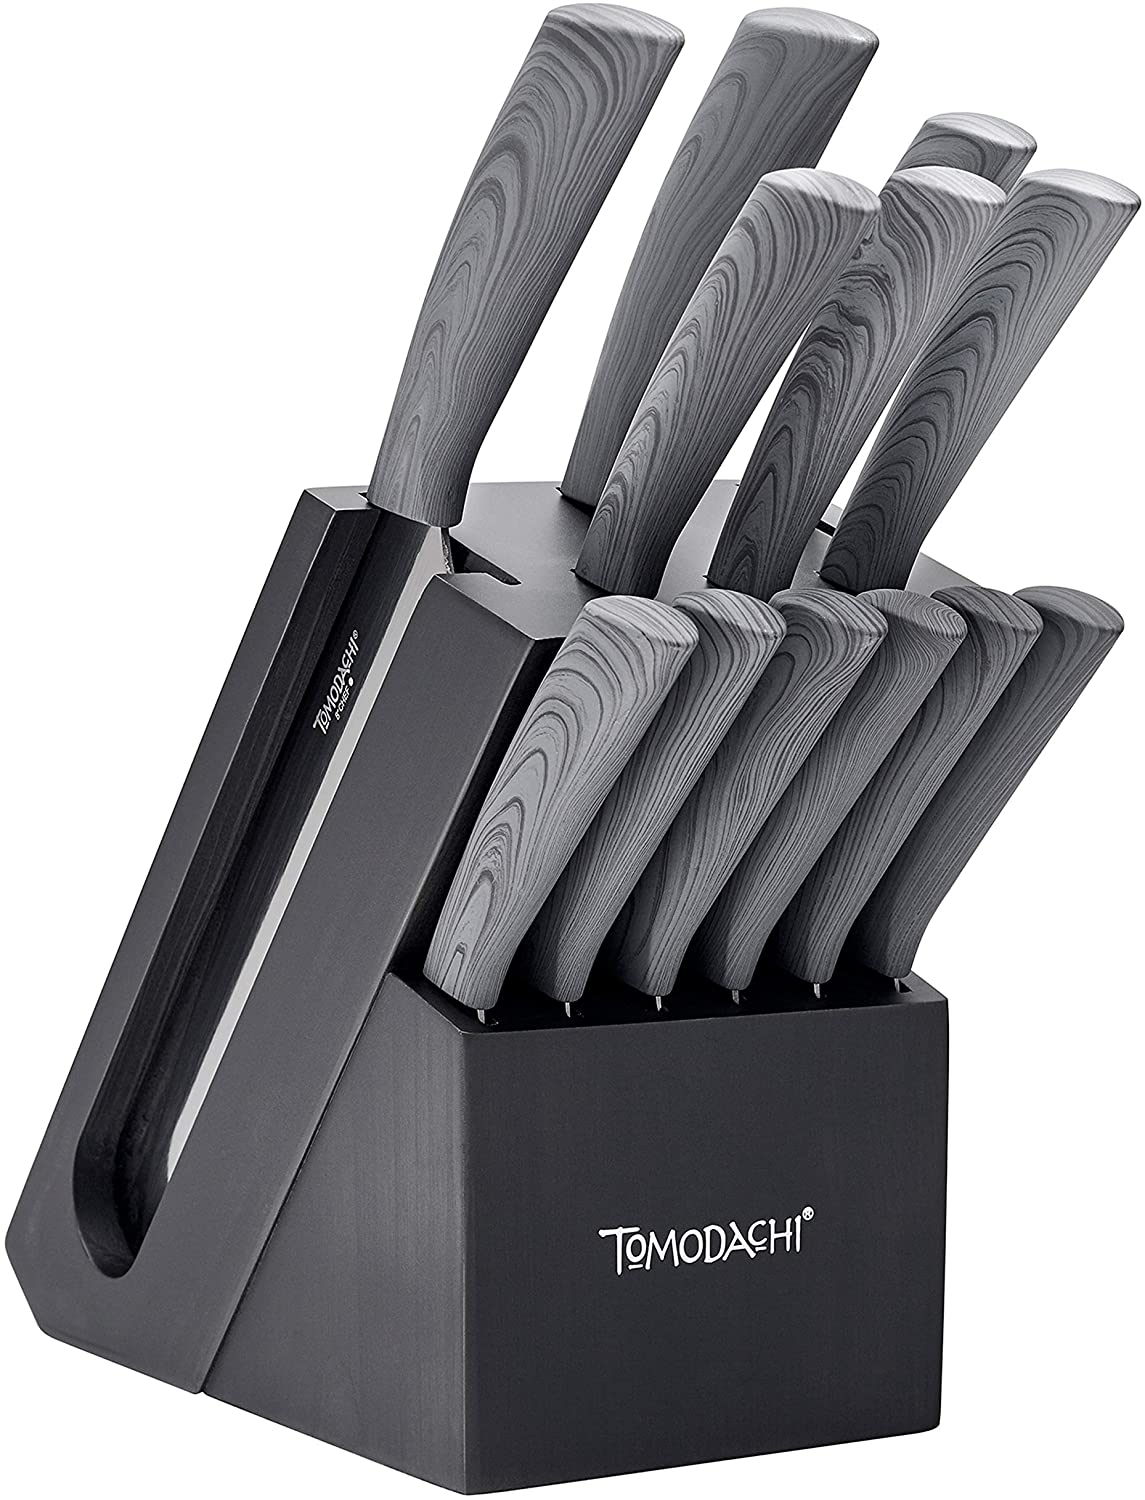 Hampton Forge Tomodachi Raintree Ash 3-Pc. Knife Set with Blade Guards